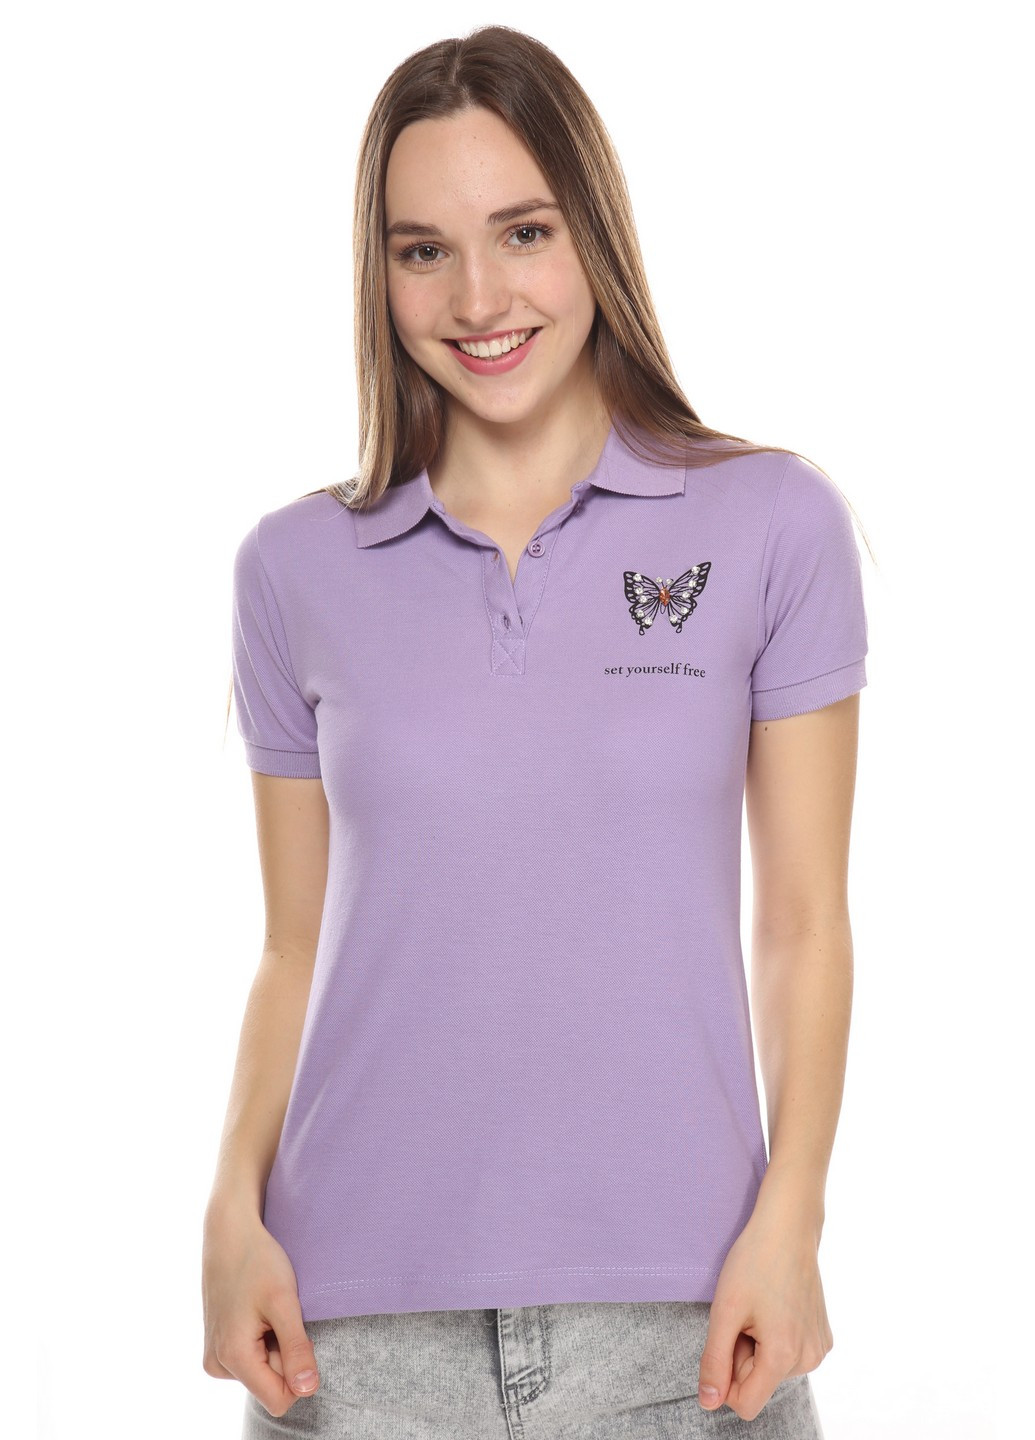 Сиреневая женская футболка-поло pol-03 l сиреневый (2000904154036) PEPPER MINT однотонная